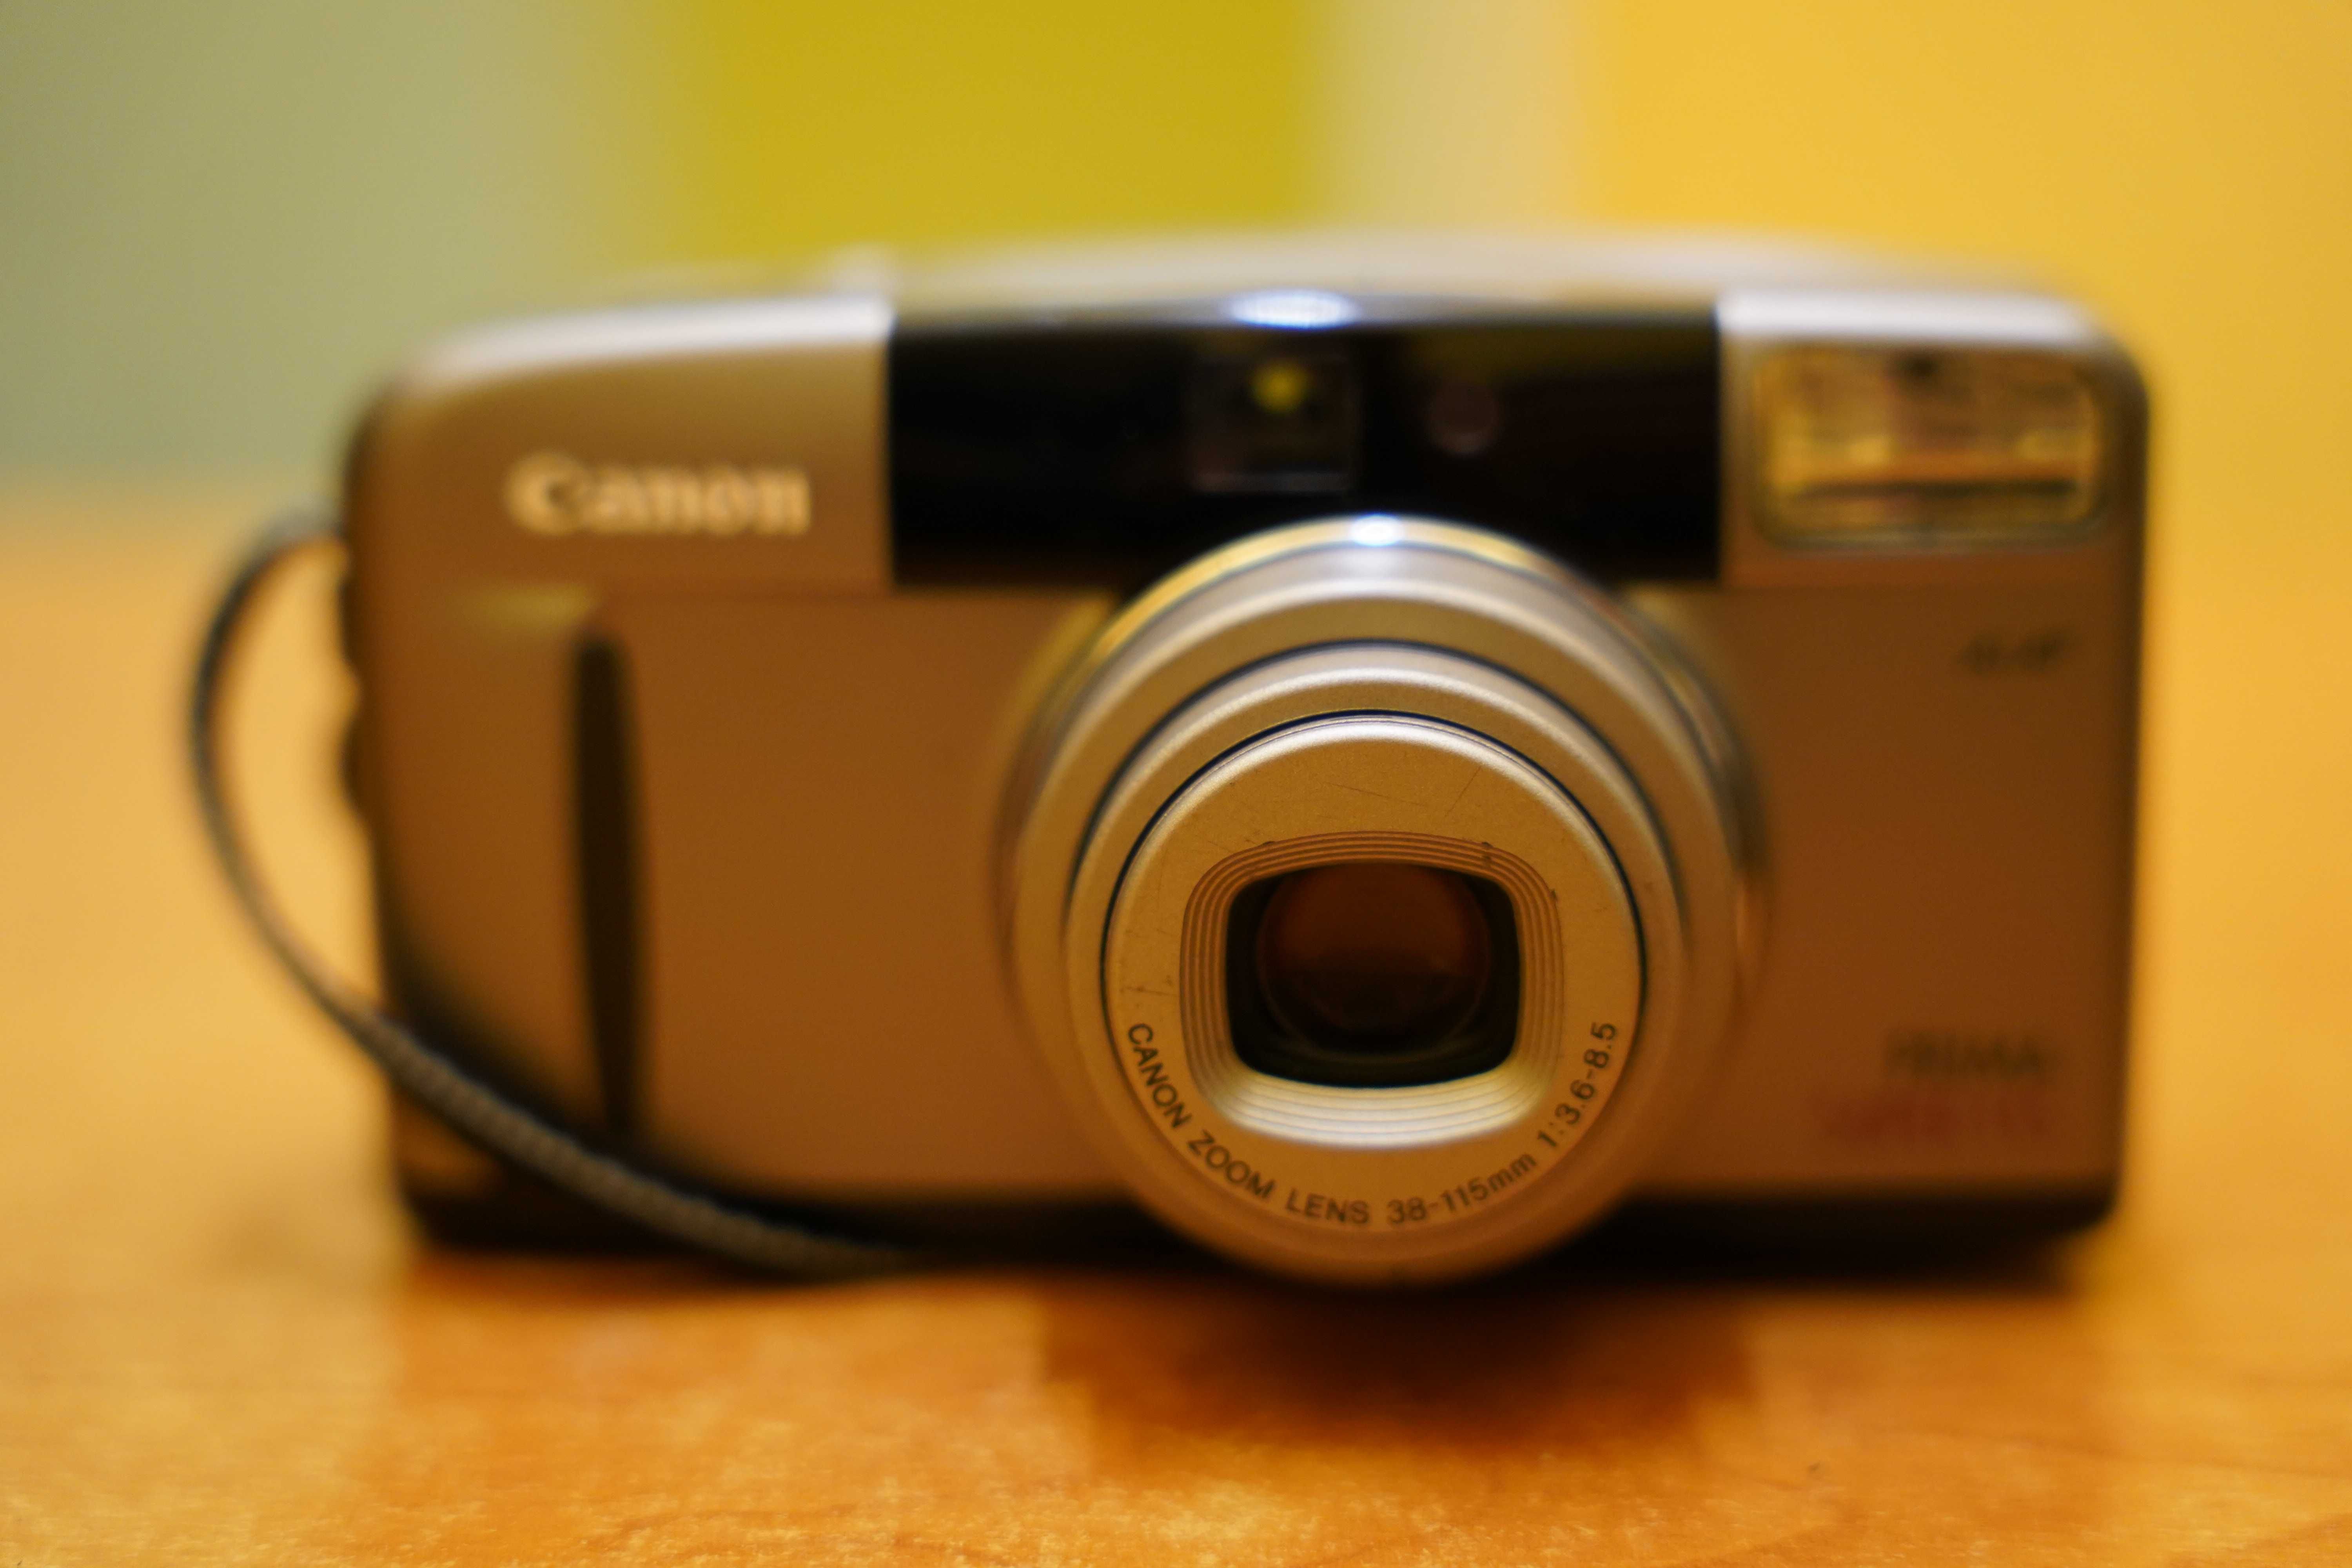 Canon Prima Super 115 aparat fotograficzny analogowy